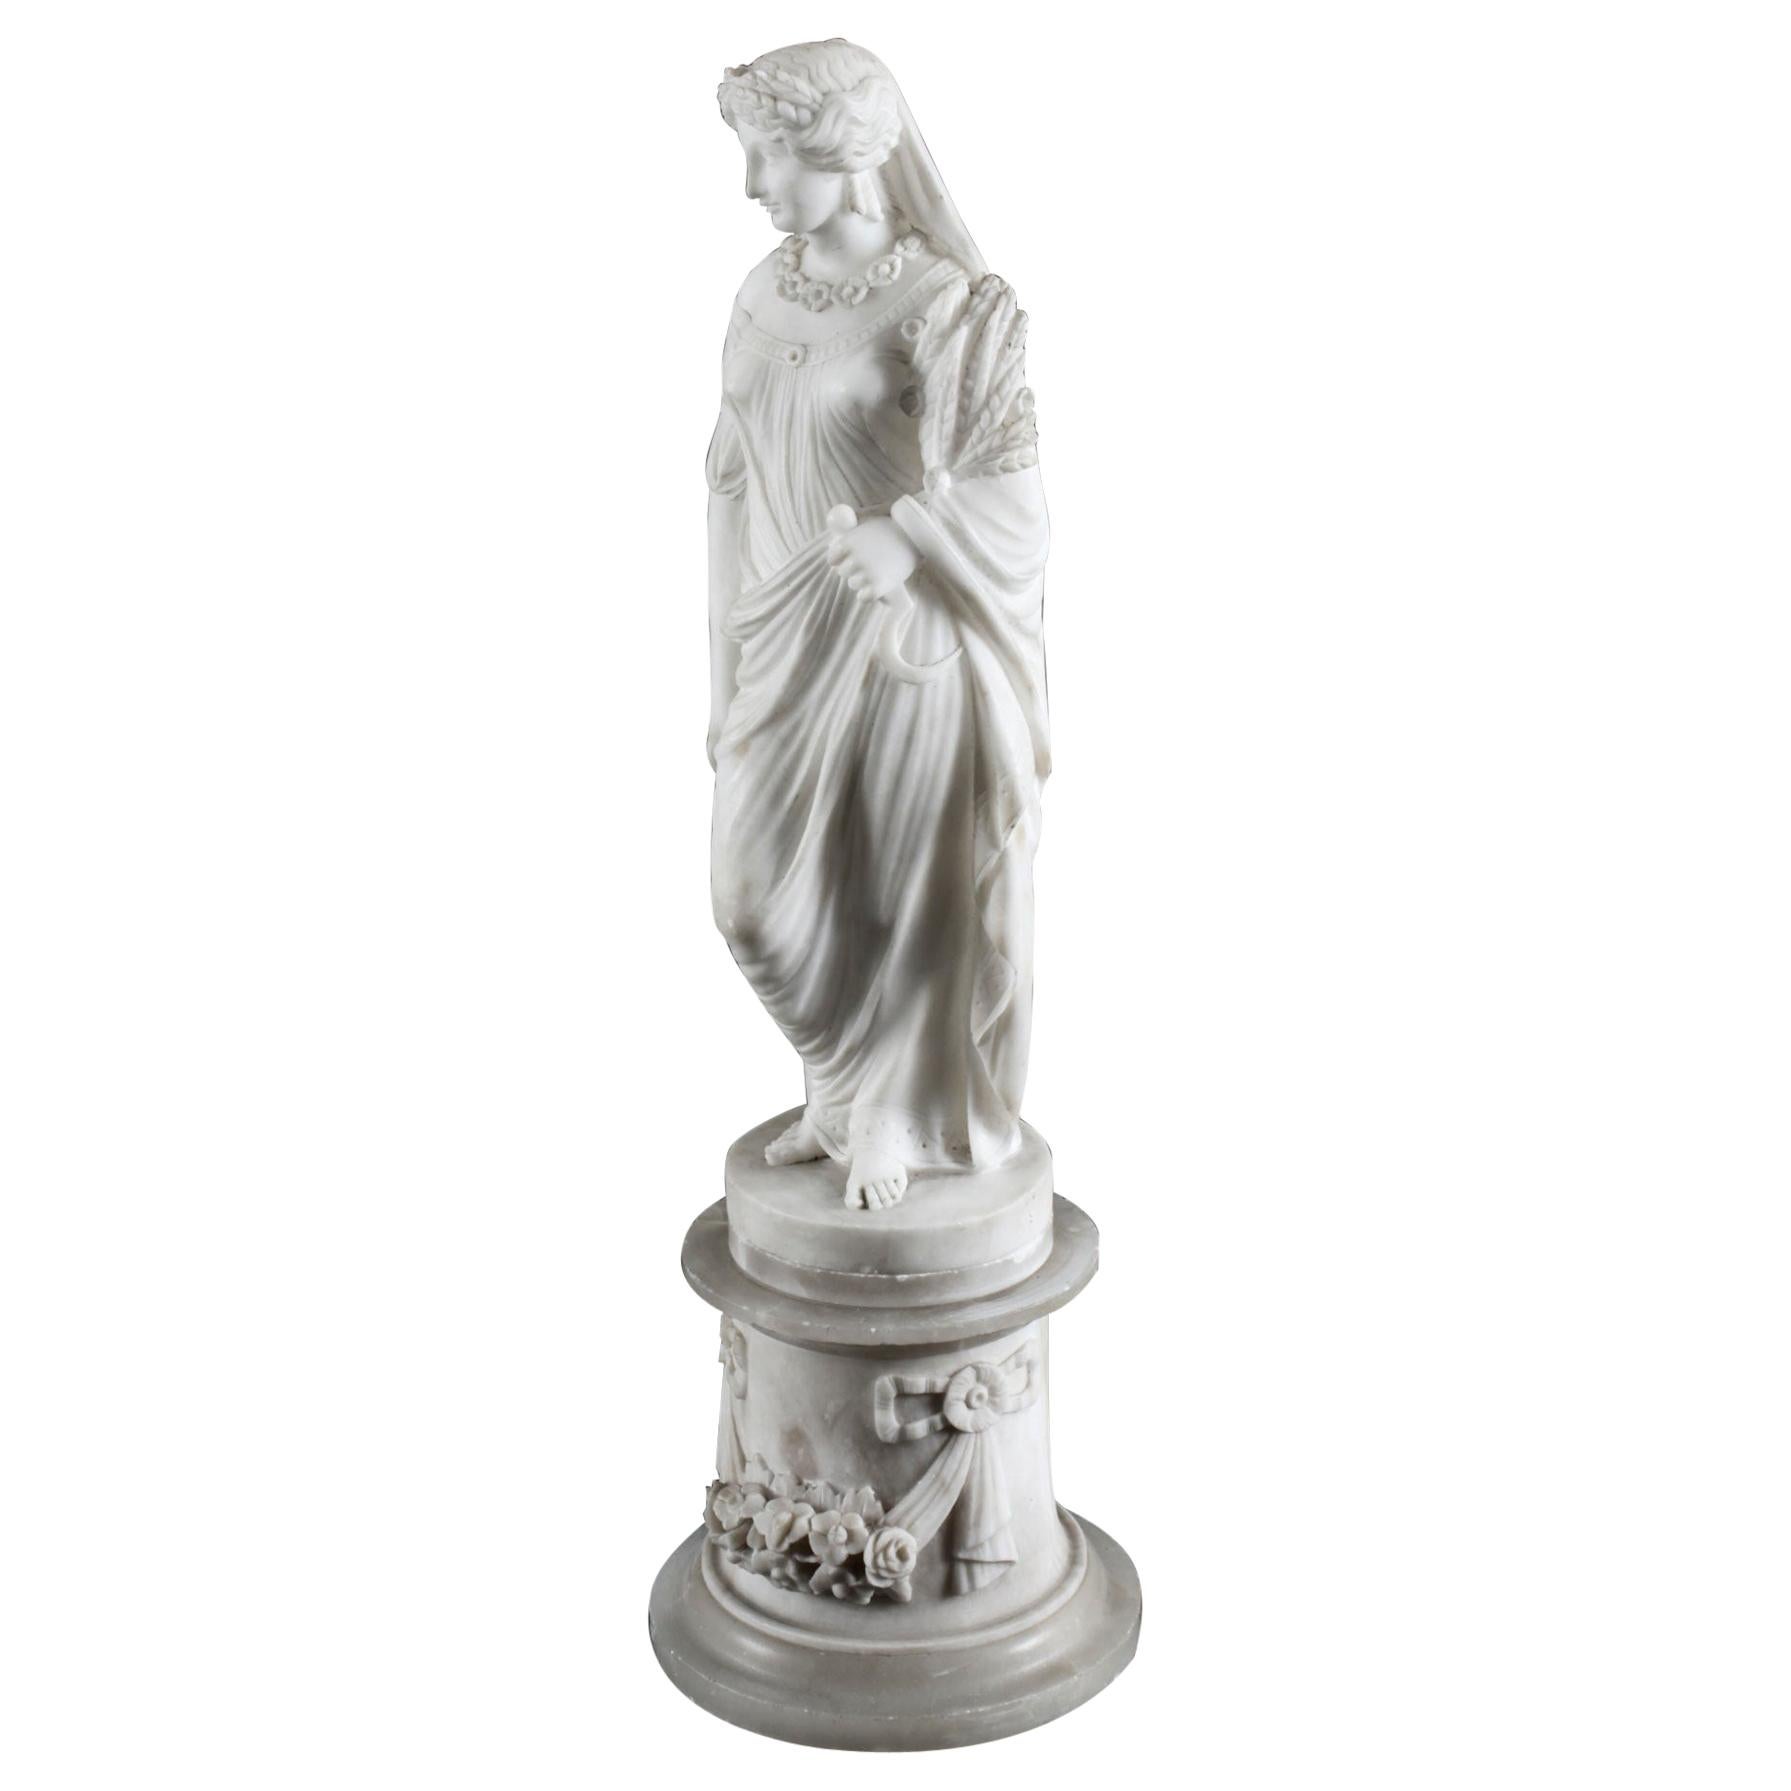 Antique Italian Alabaster Sculpture of the Goddess Demeter, 19th Century